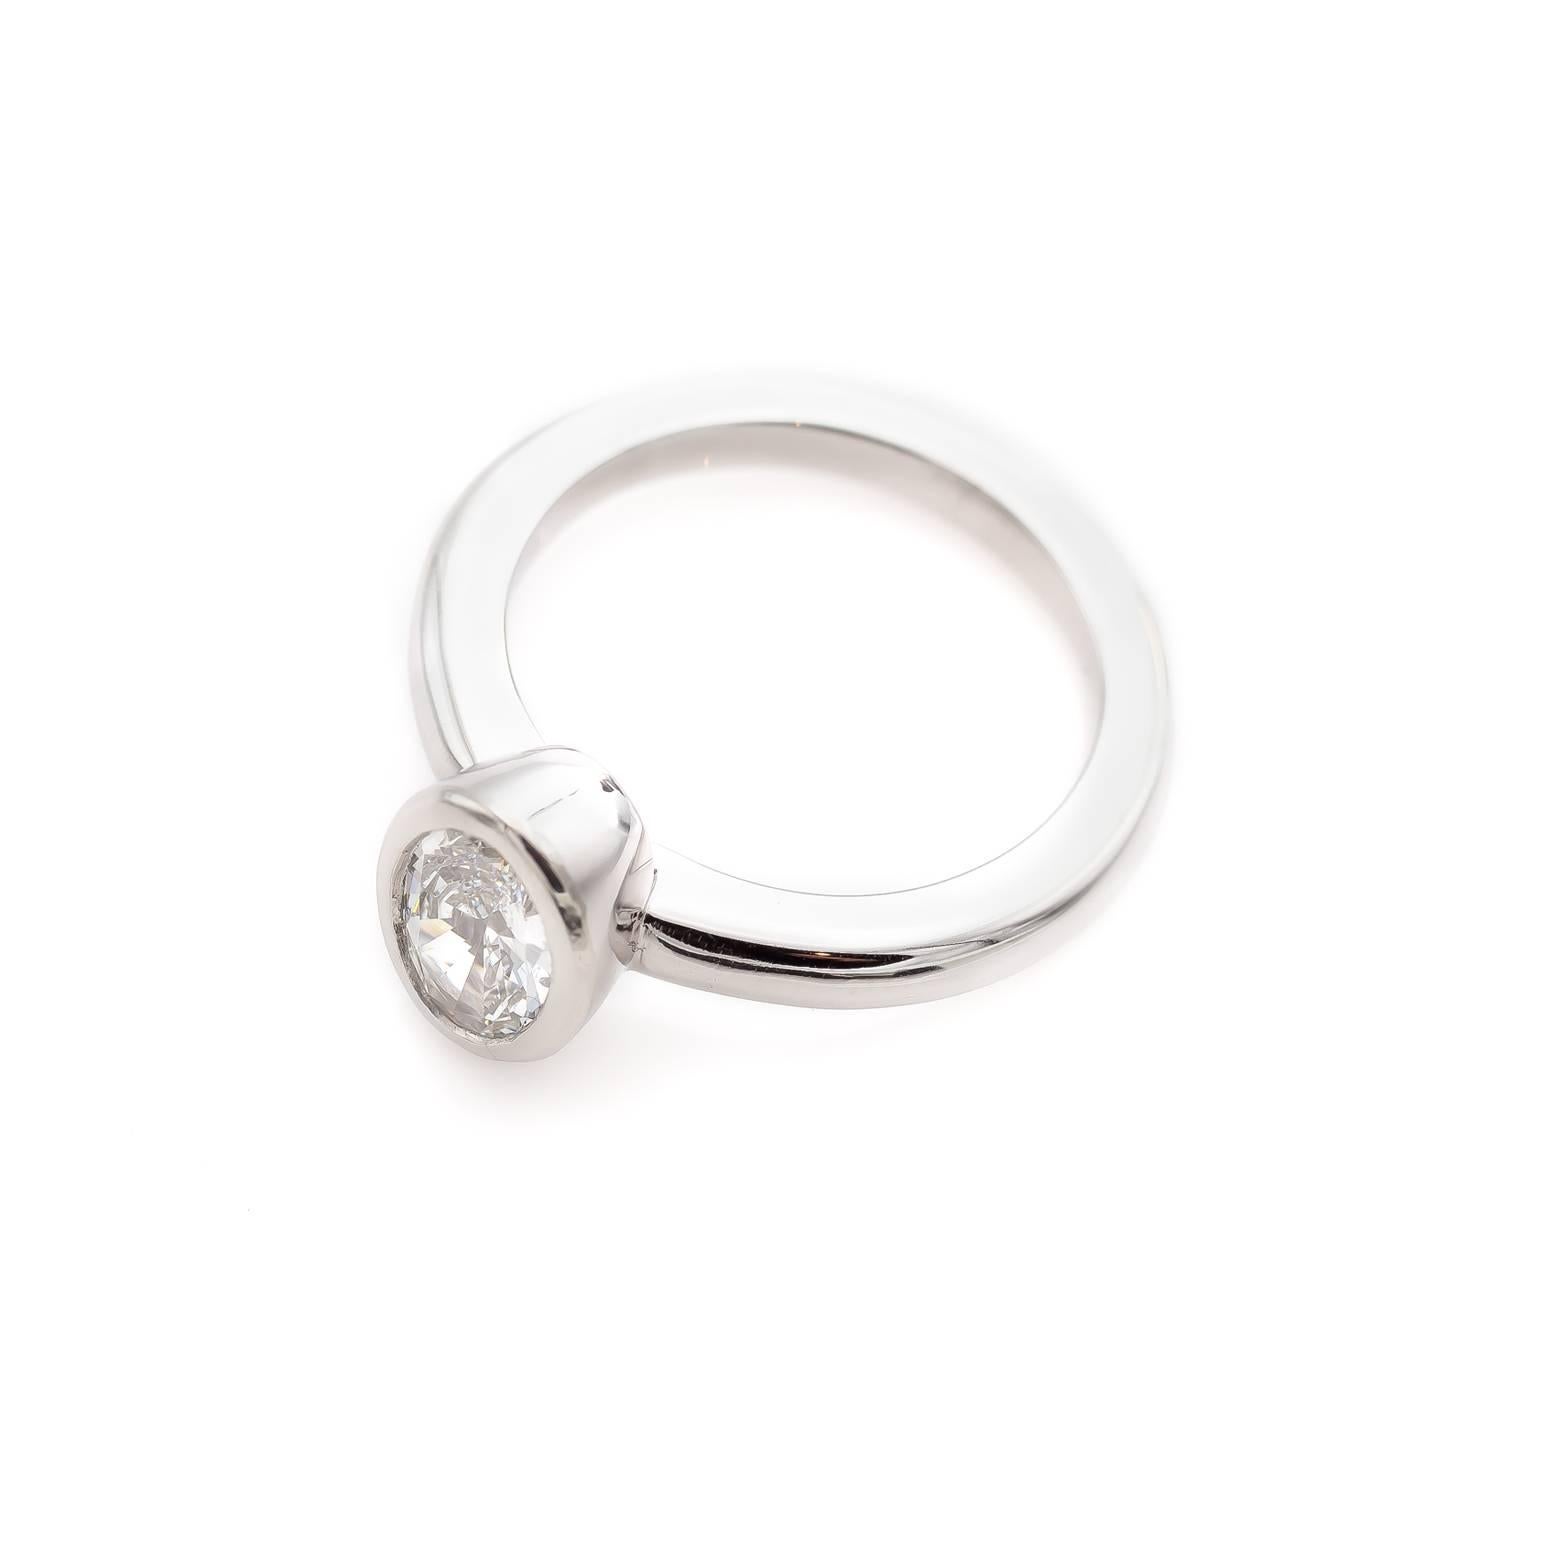 Modernist Modern Solitaire Engagement Platinum Ring Oval Diamond 0.84 Carats